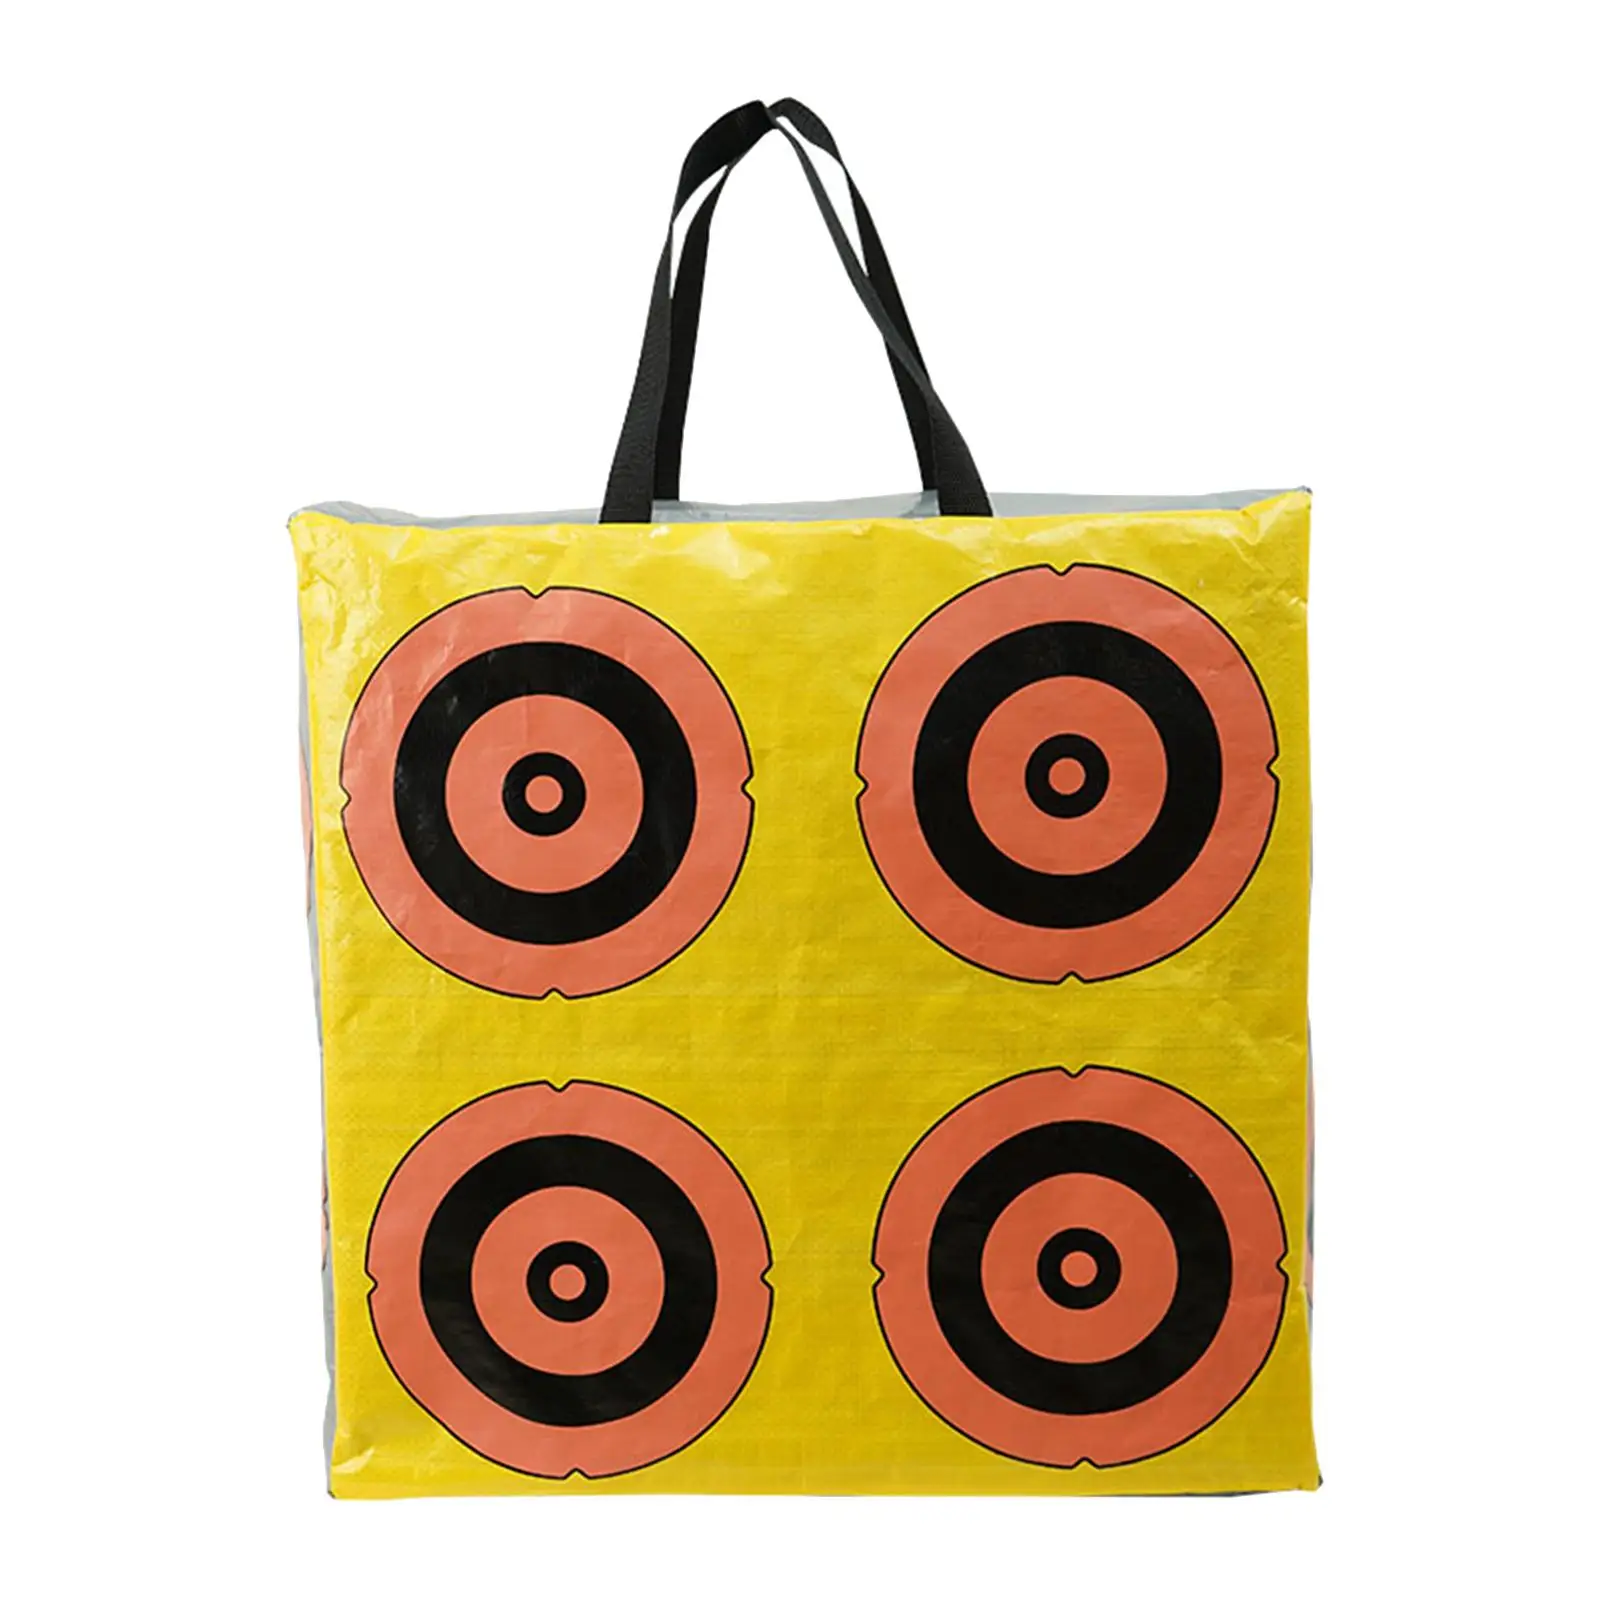 Field Point Bag Archery Target with Bullseyes Moving Targets Range Targets Shooting Targets for Training Backyard Practice